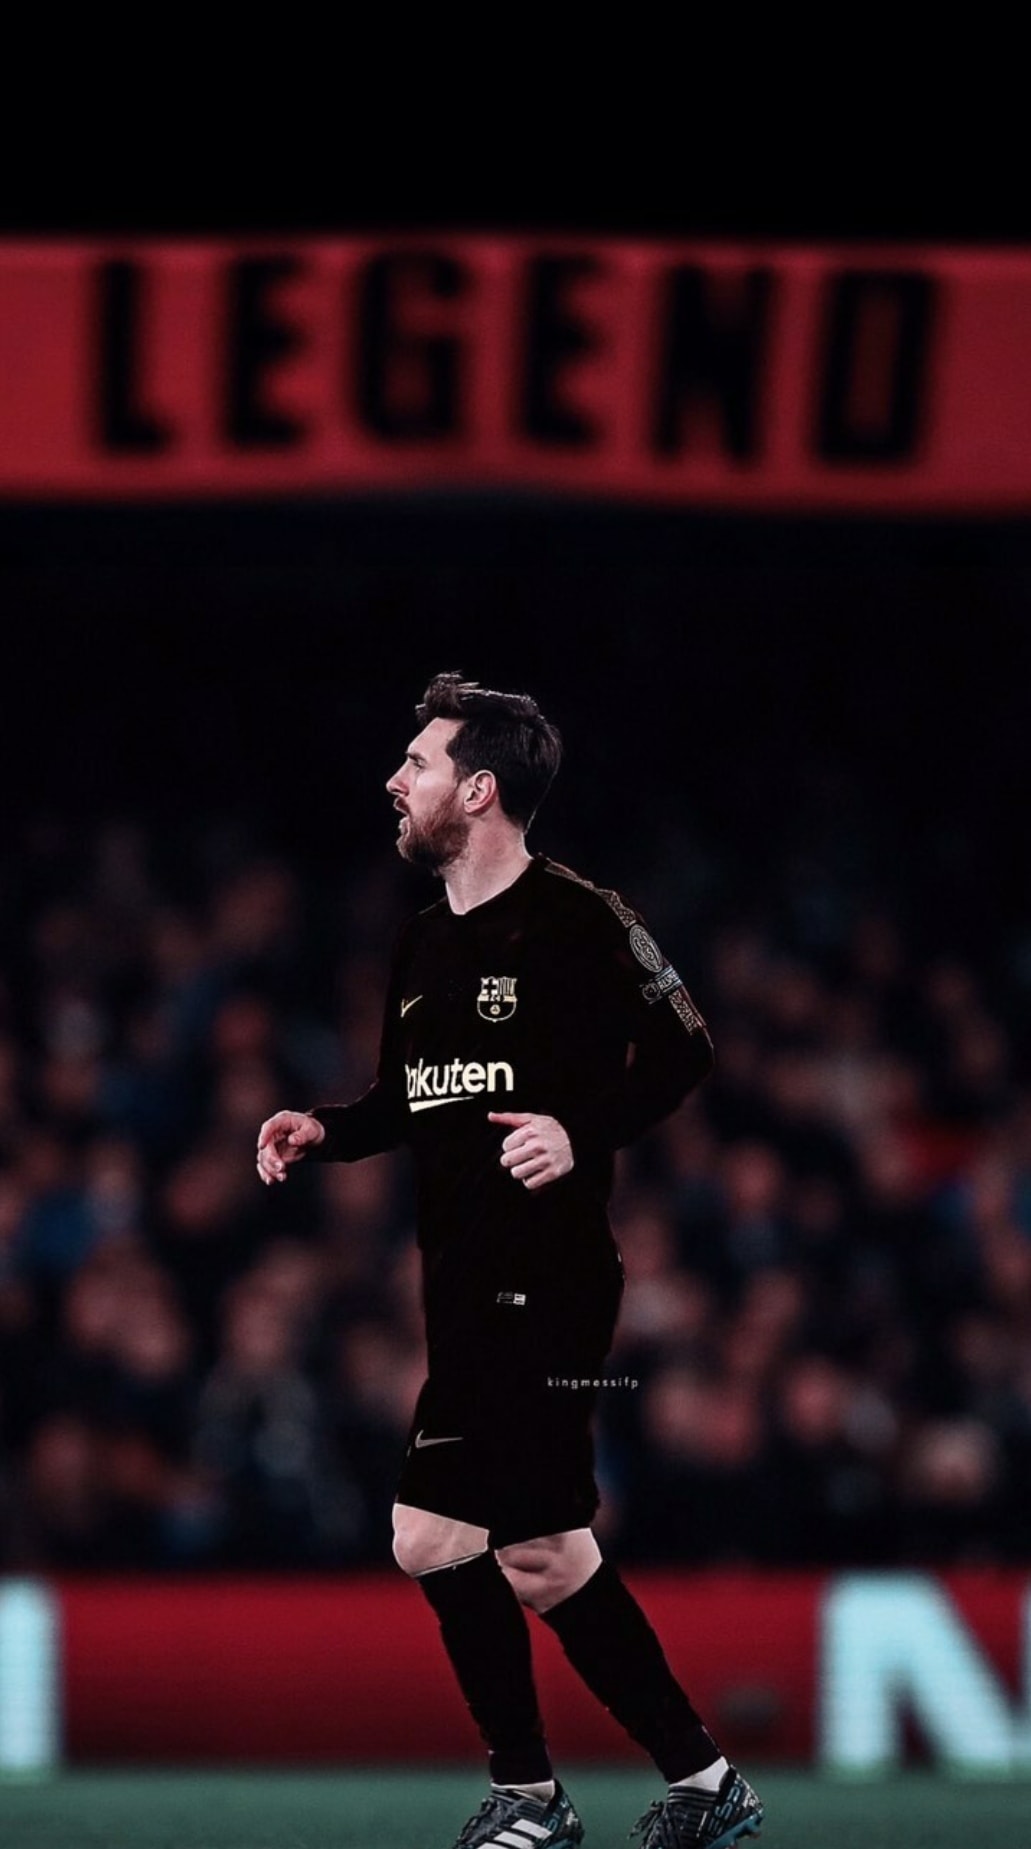 The Nation Of Blaugrana Leo Messi Wallpaper In Black